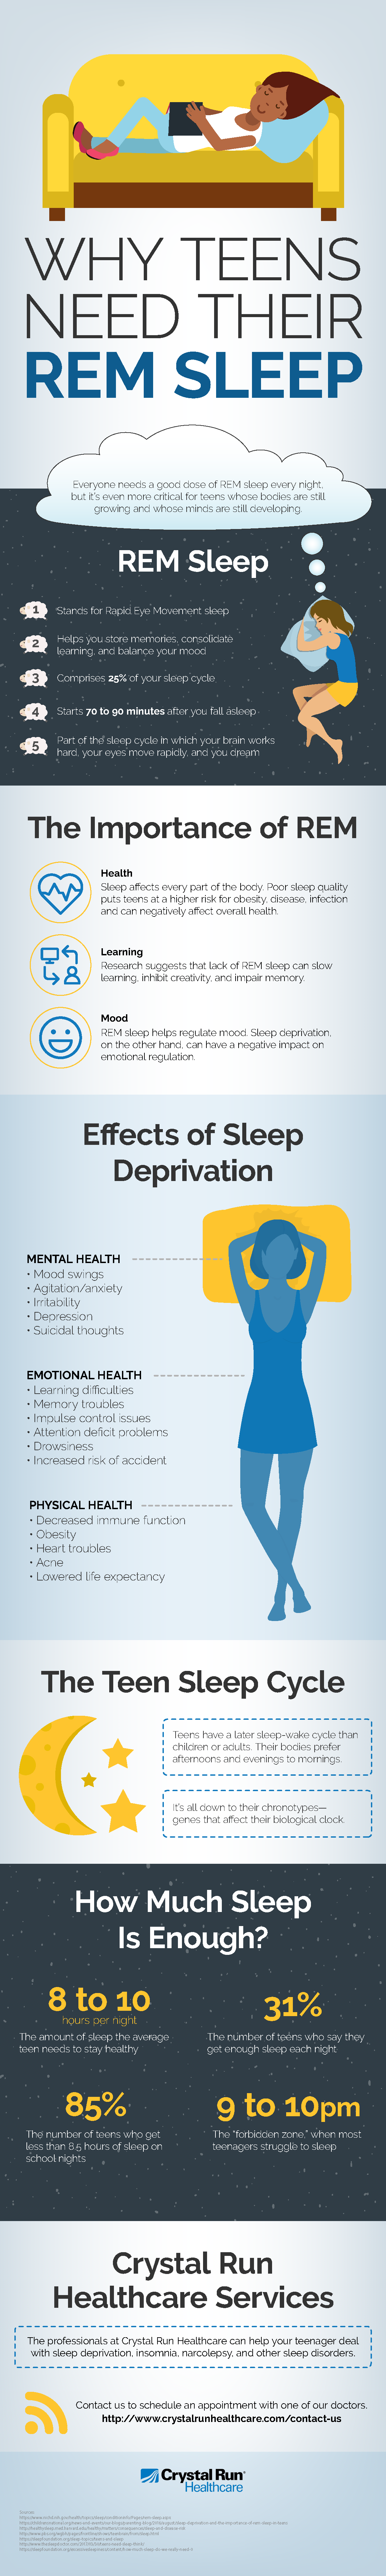 Why Teens Need Their REM Sleep Infographic